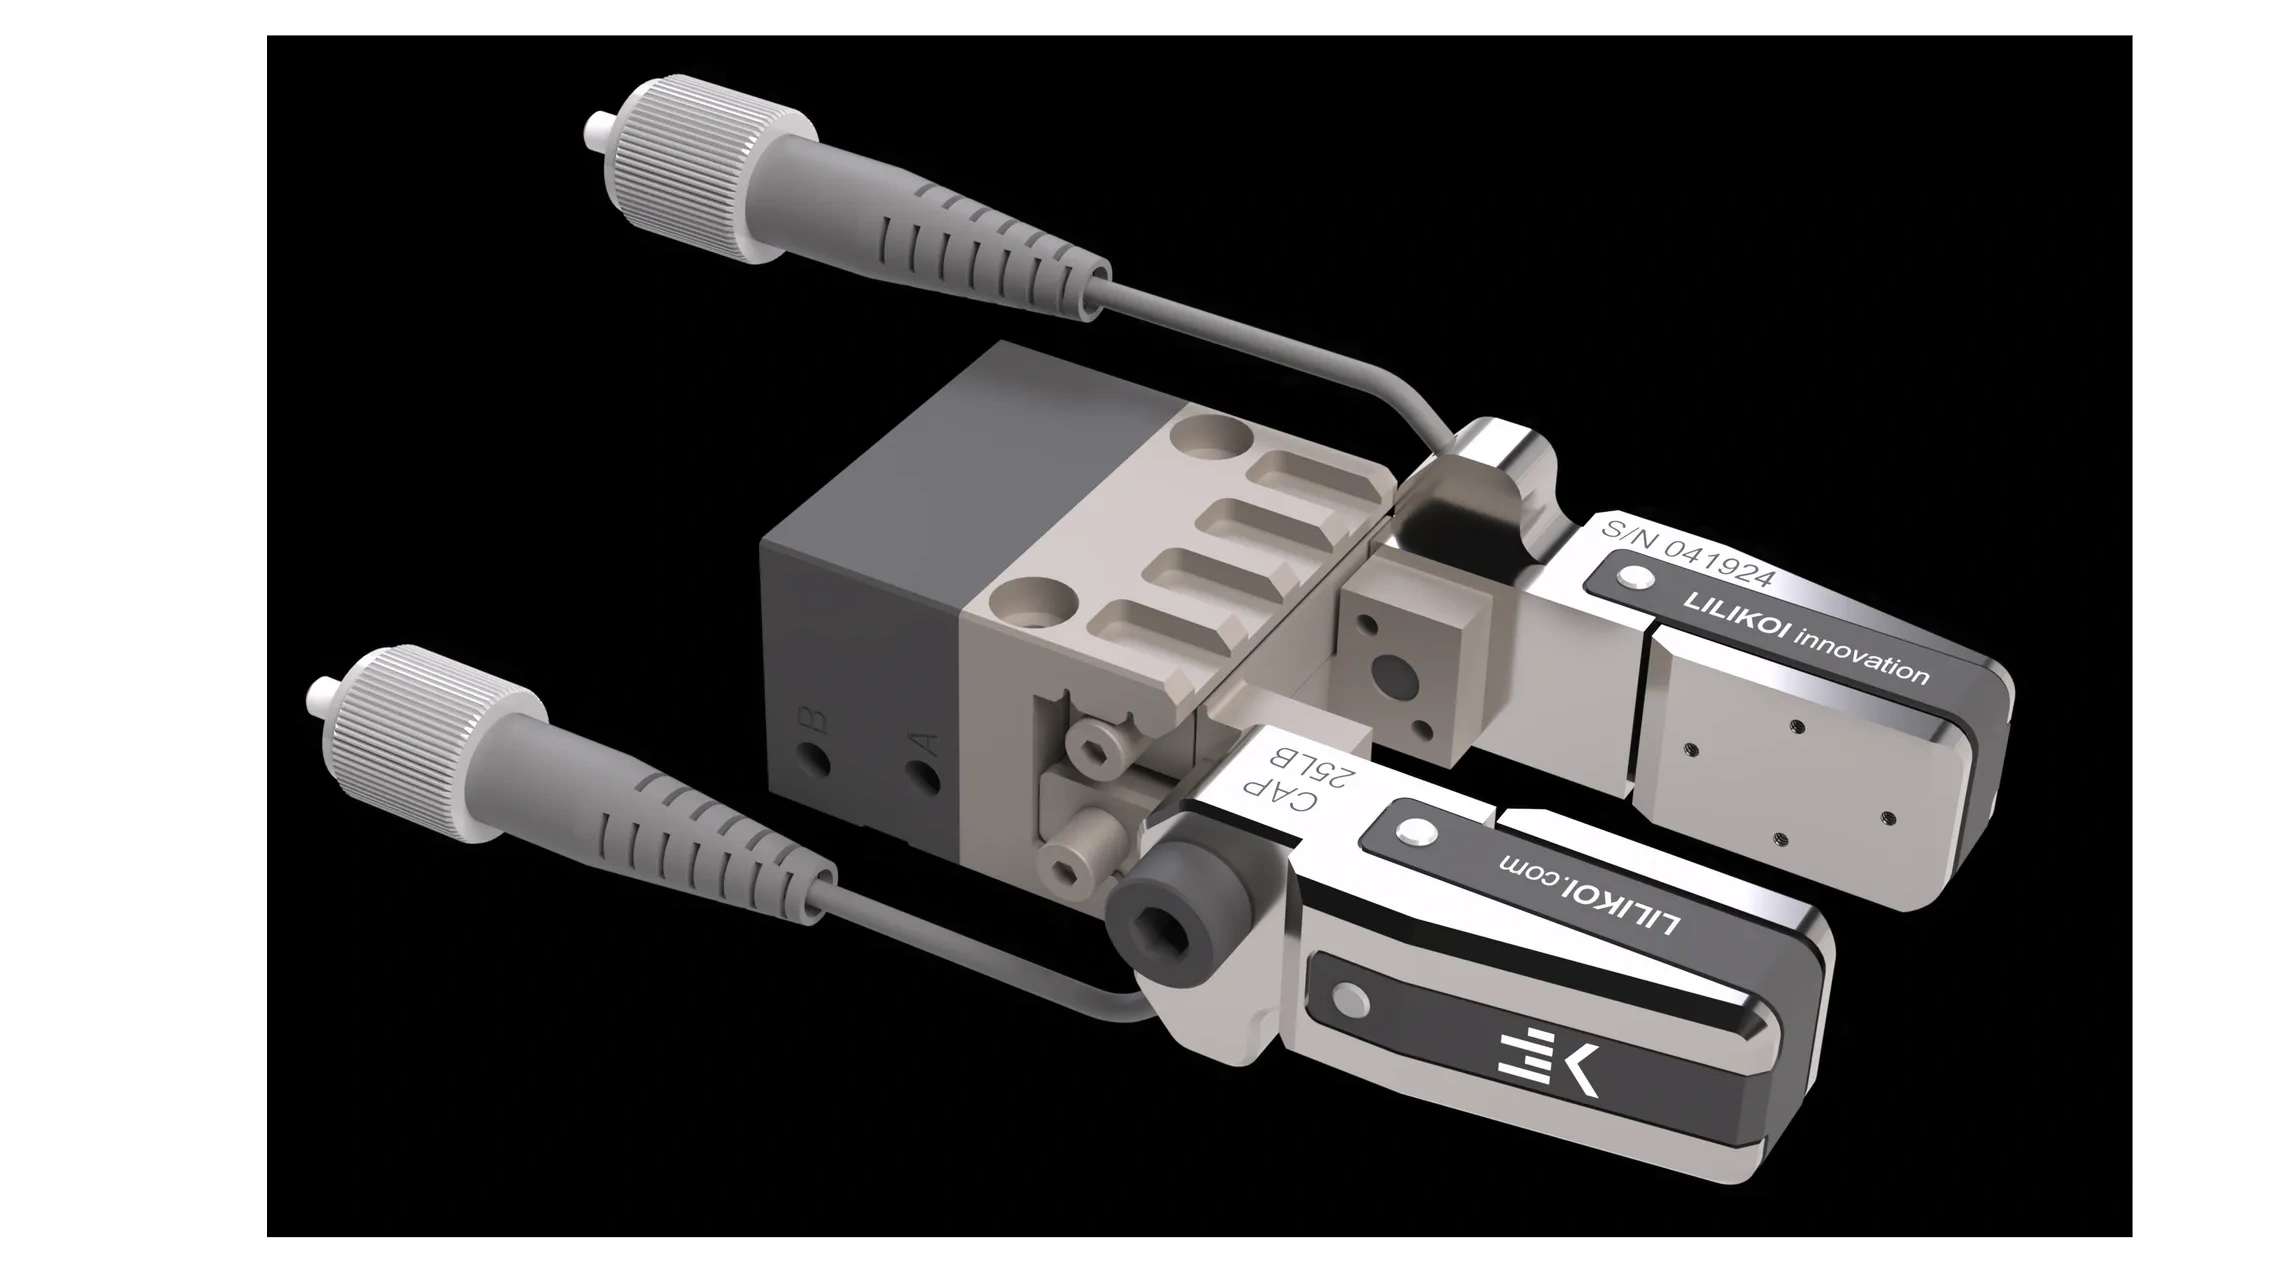 LILIKOI innovation FG25 Optical FBG Finger Force Sensor integration into robotic gripper actuators. 